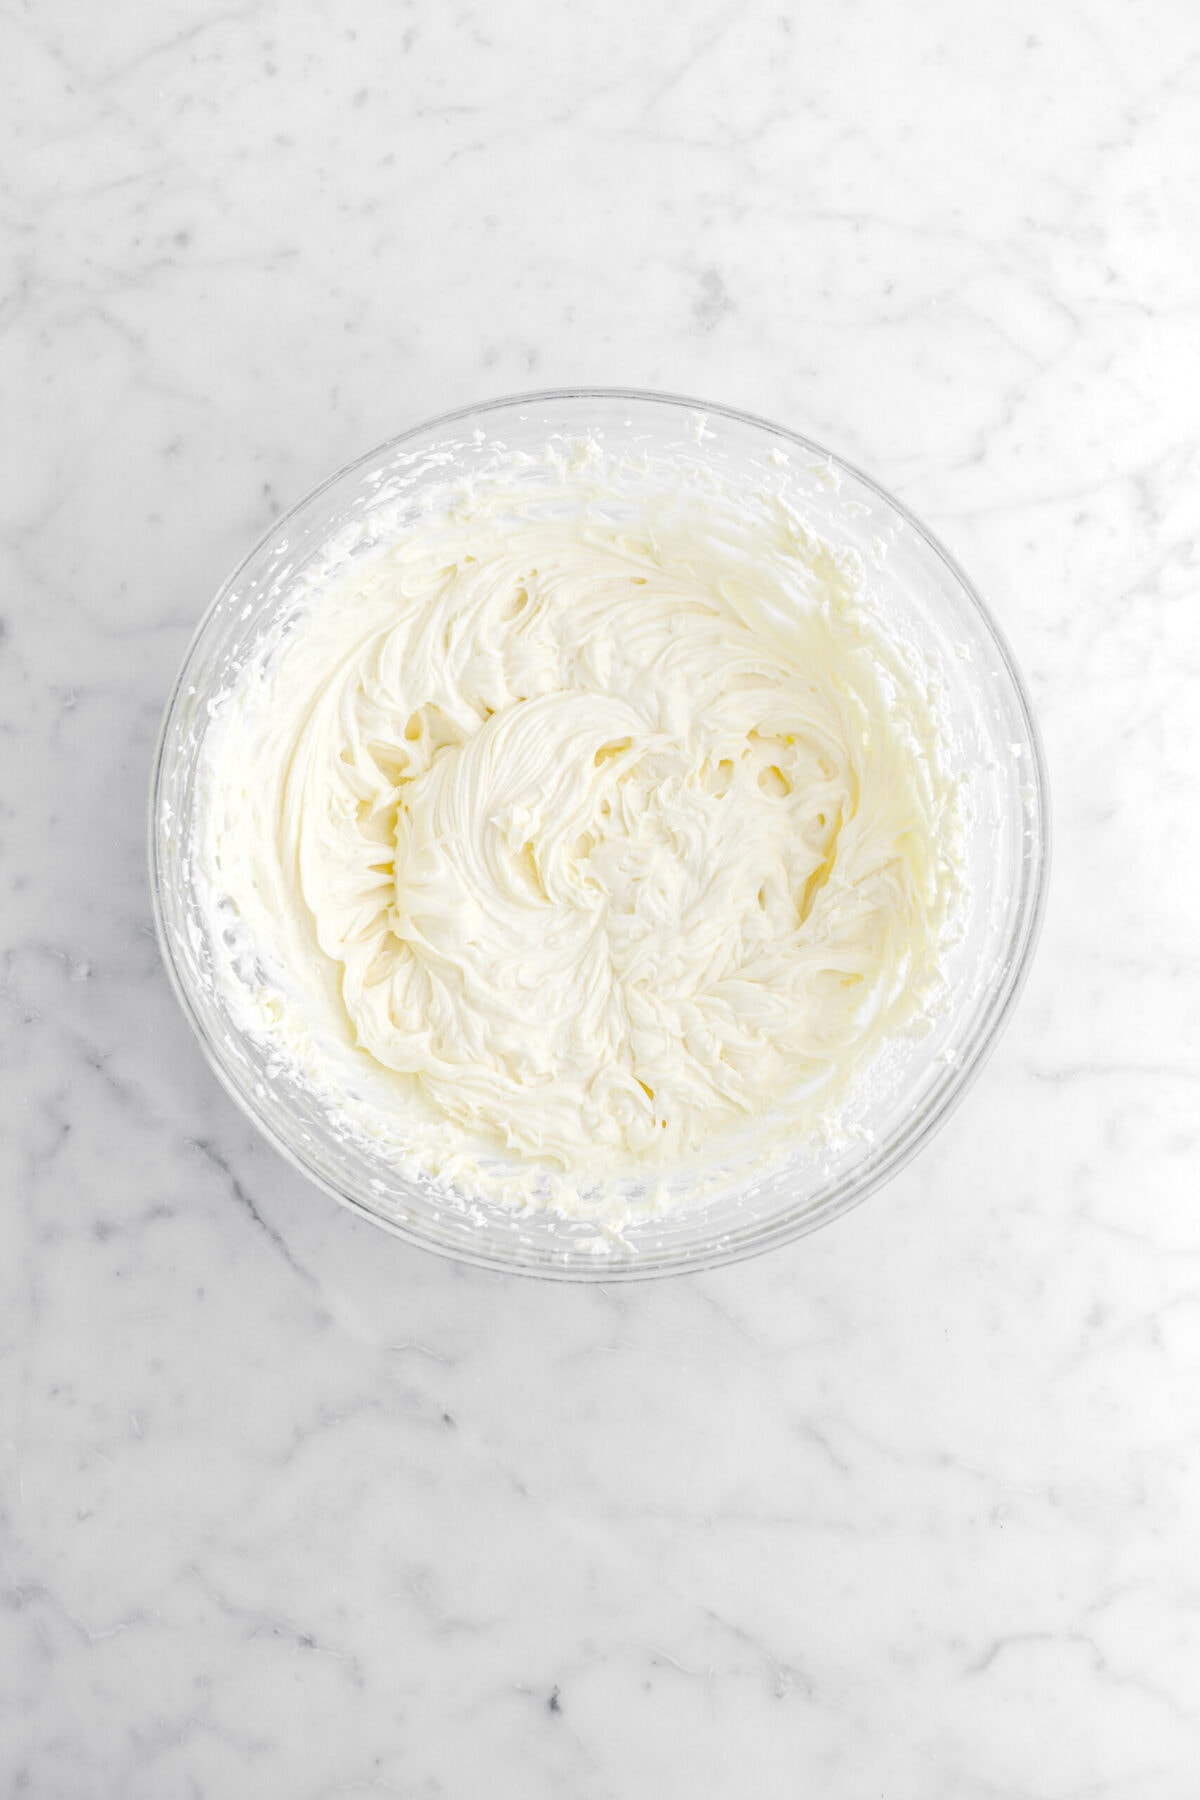 vanilla stirred into cream cheese mixture.